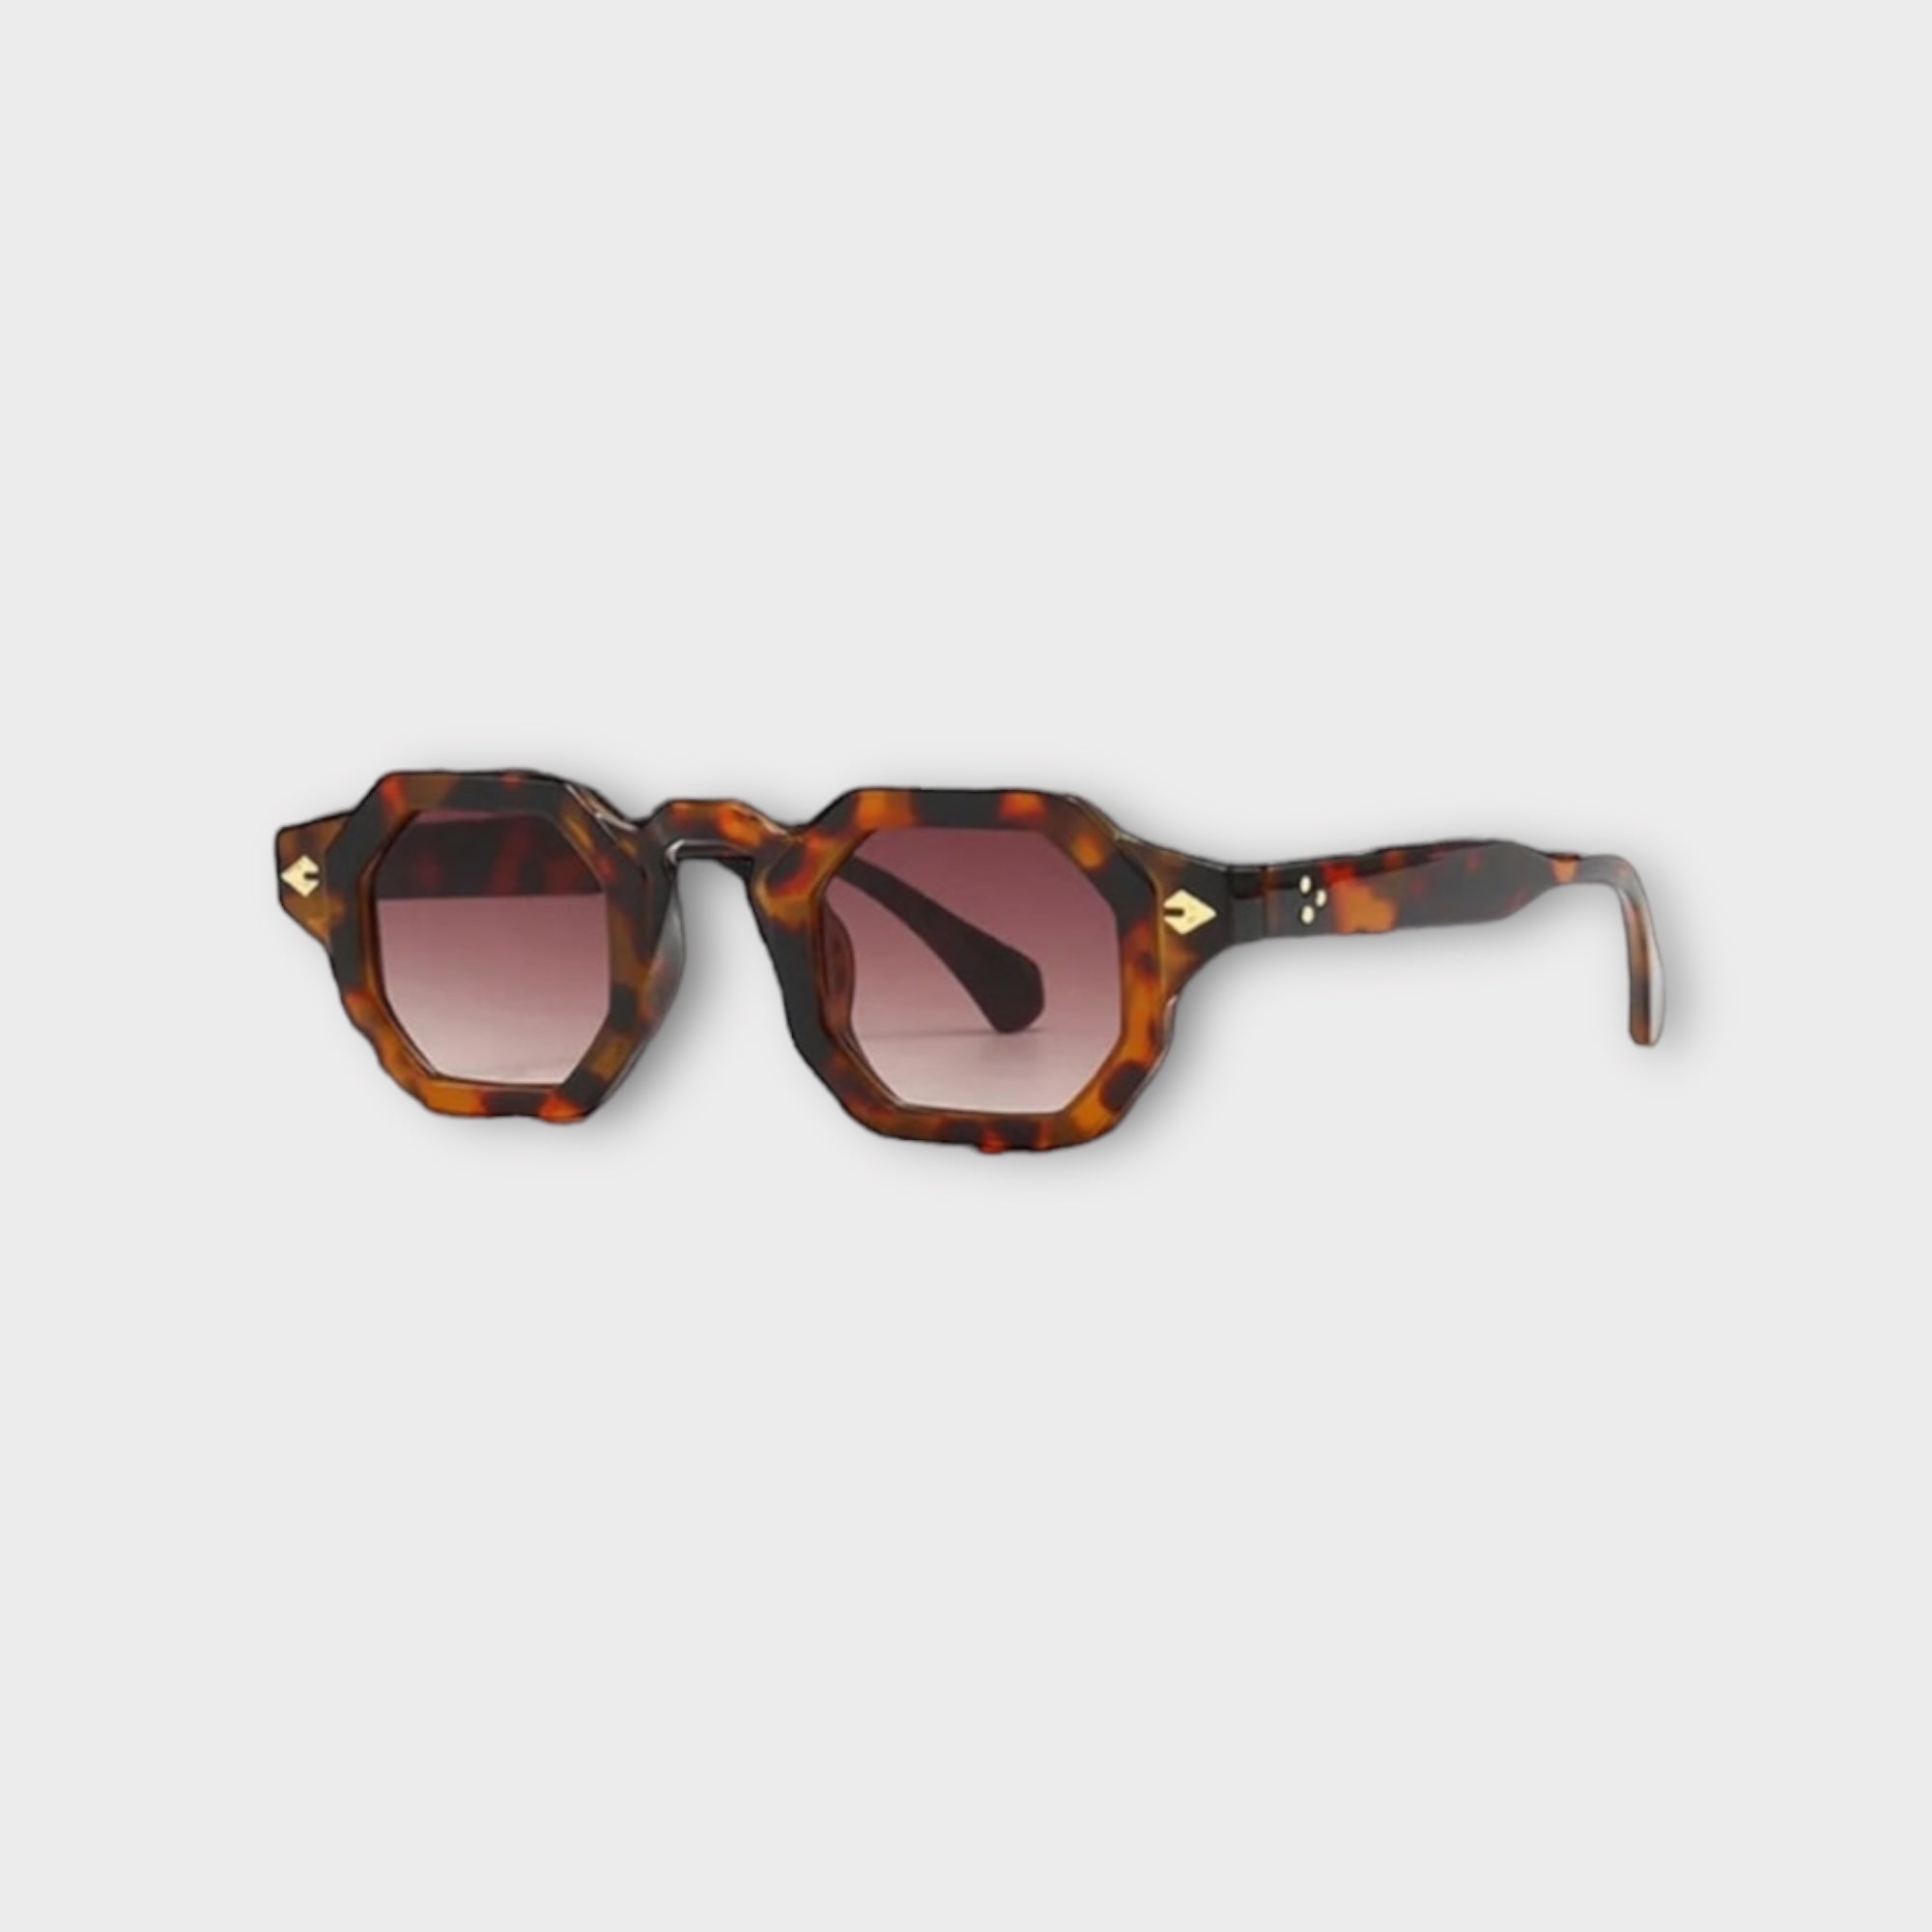 'GLAR' Square shades sunglasses for women